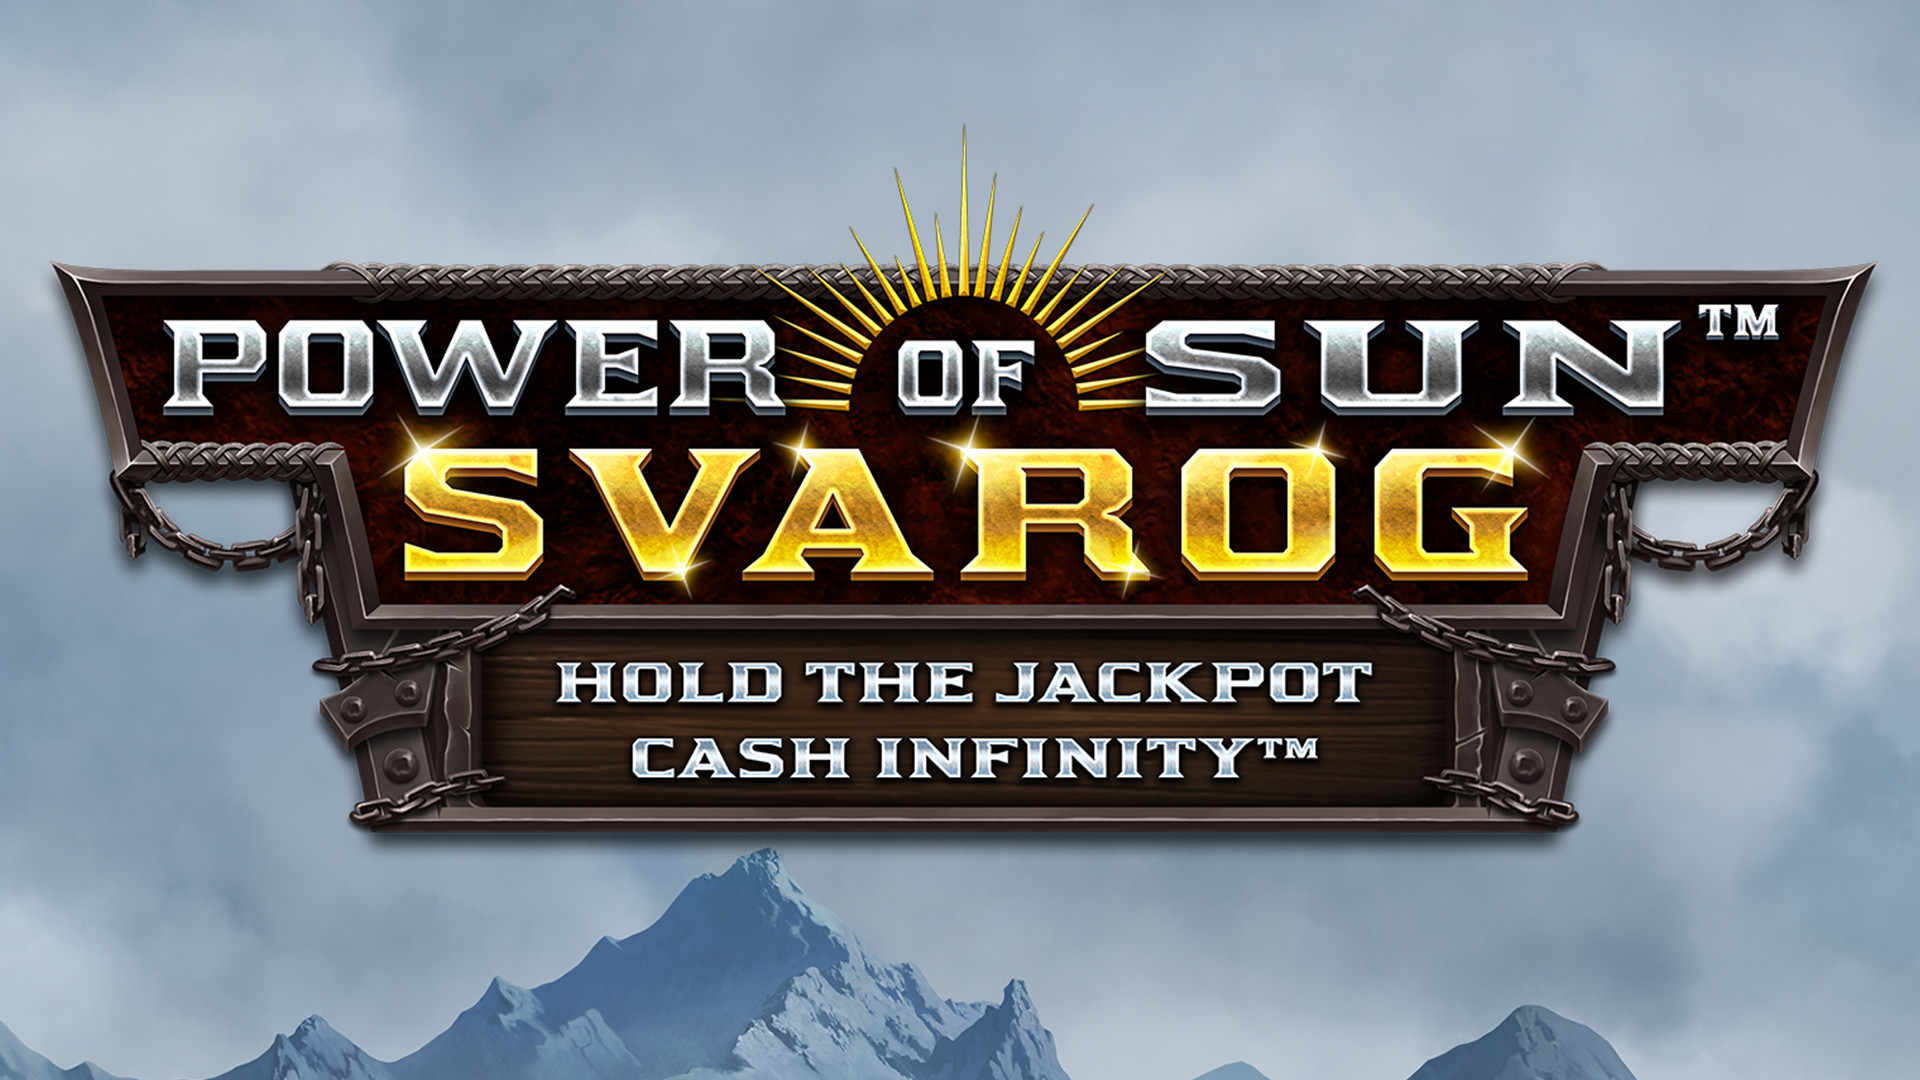 Power of Sun: Svarog